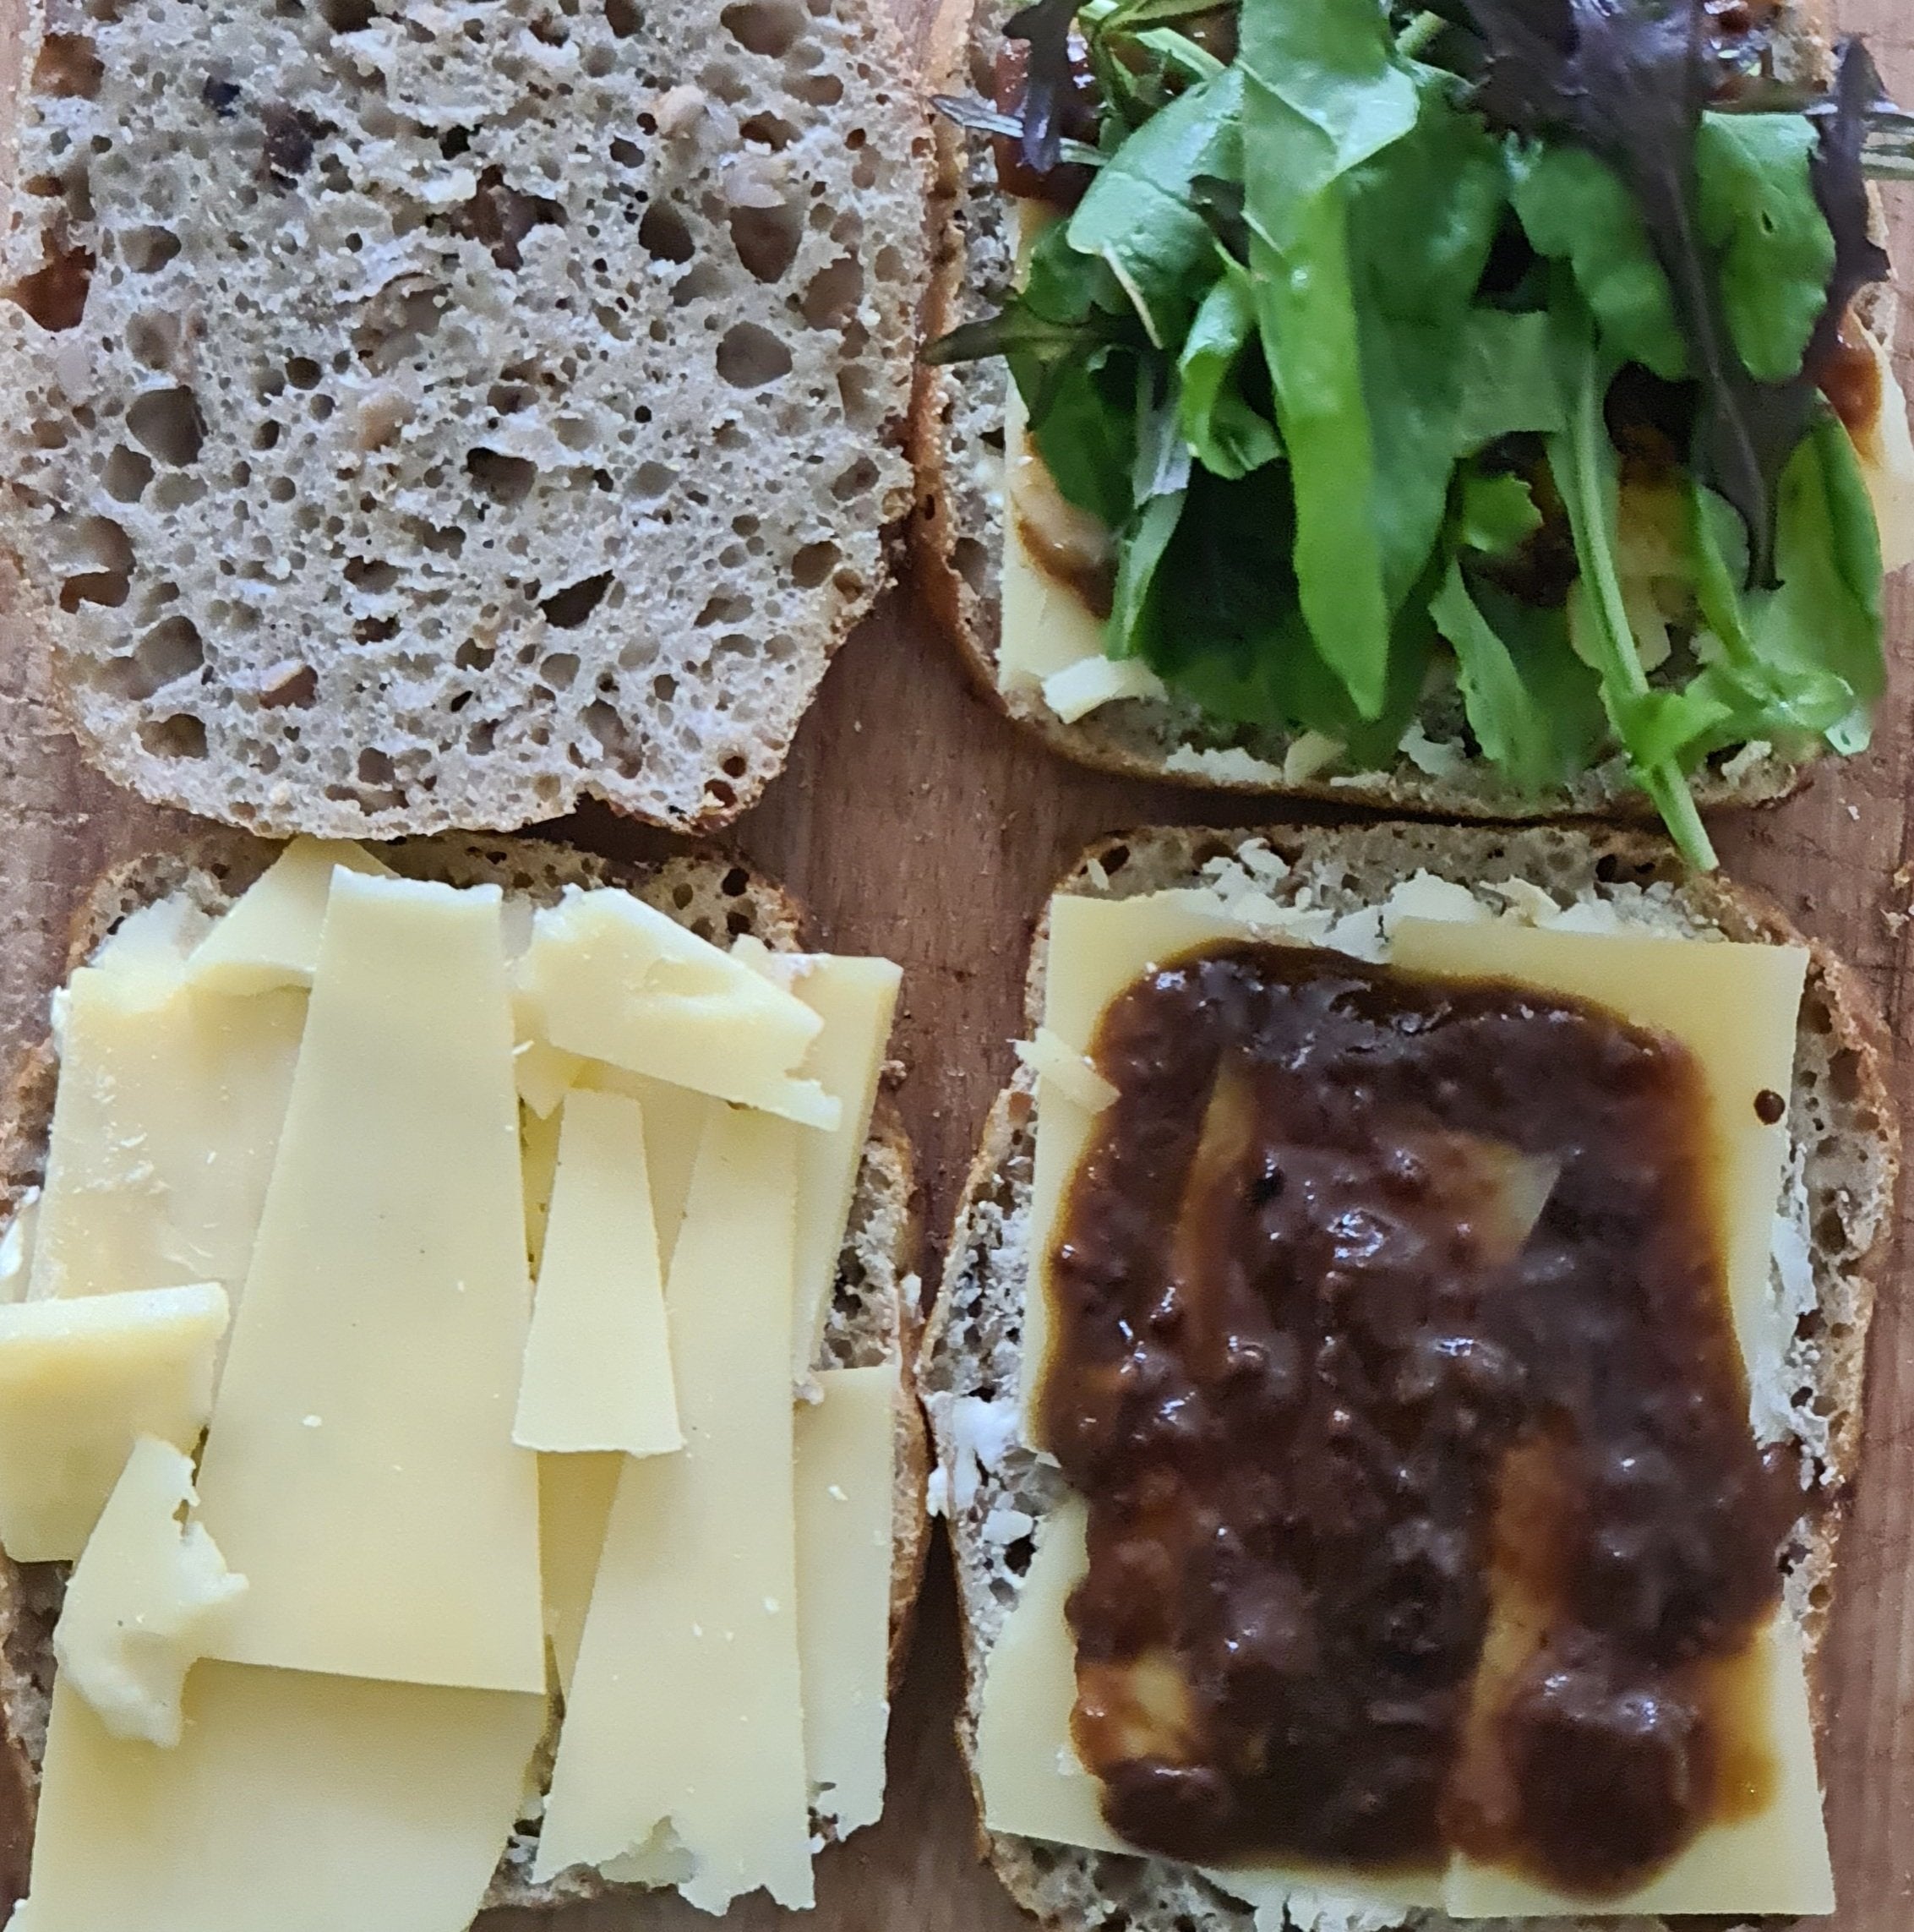 SATURDAY - Cheese & Chutney Sandwich - COVERED MARKET